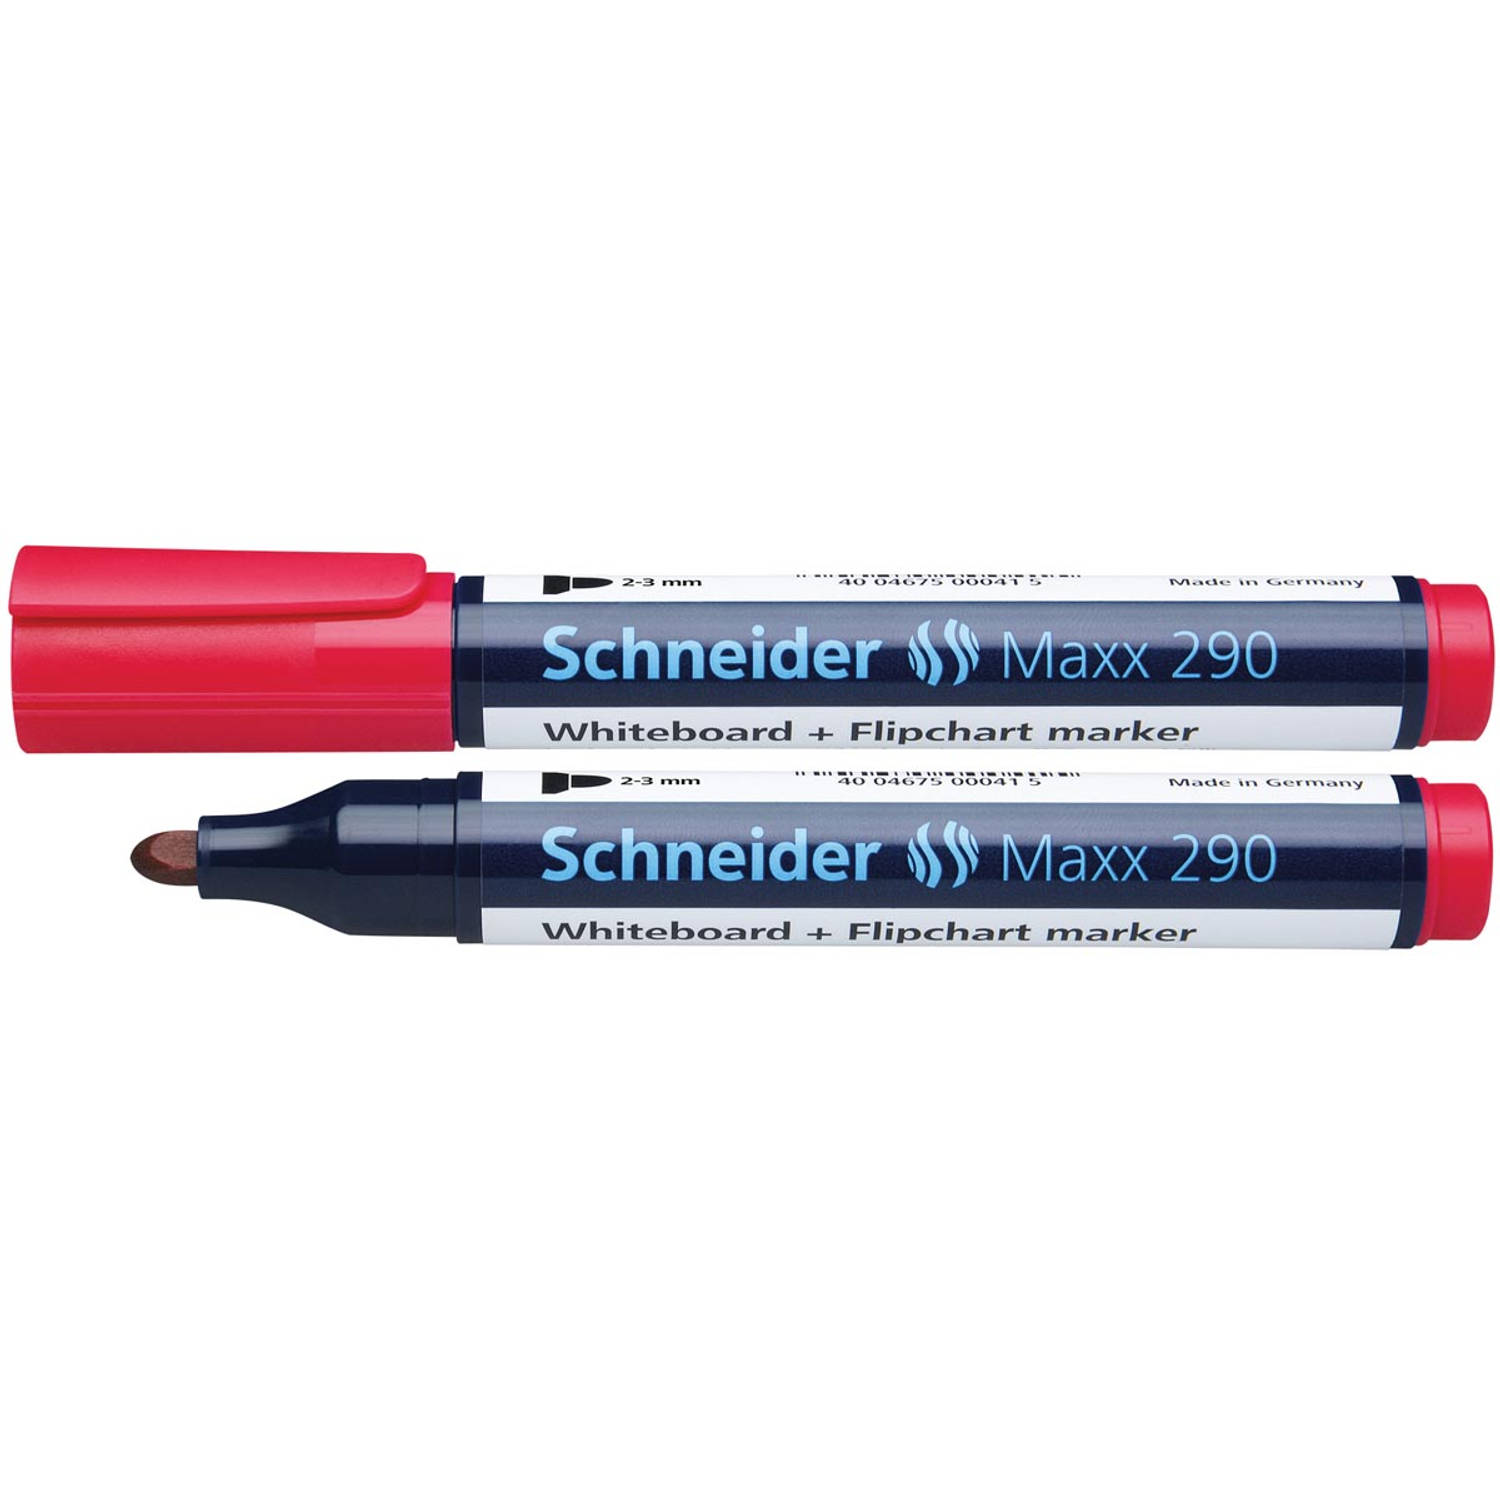 Schneider whiteboardmarker - Maxx 290 - ronde punt - rood - 10 stuks - voor whiteboard en flipover - S-129002-10